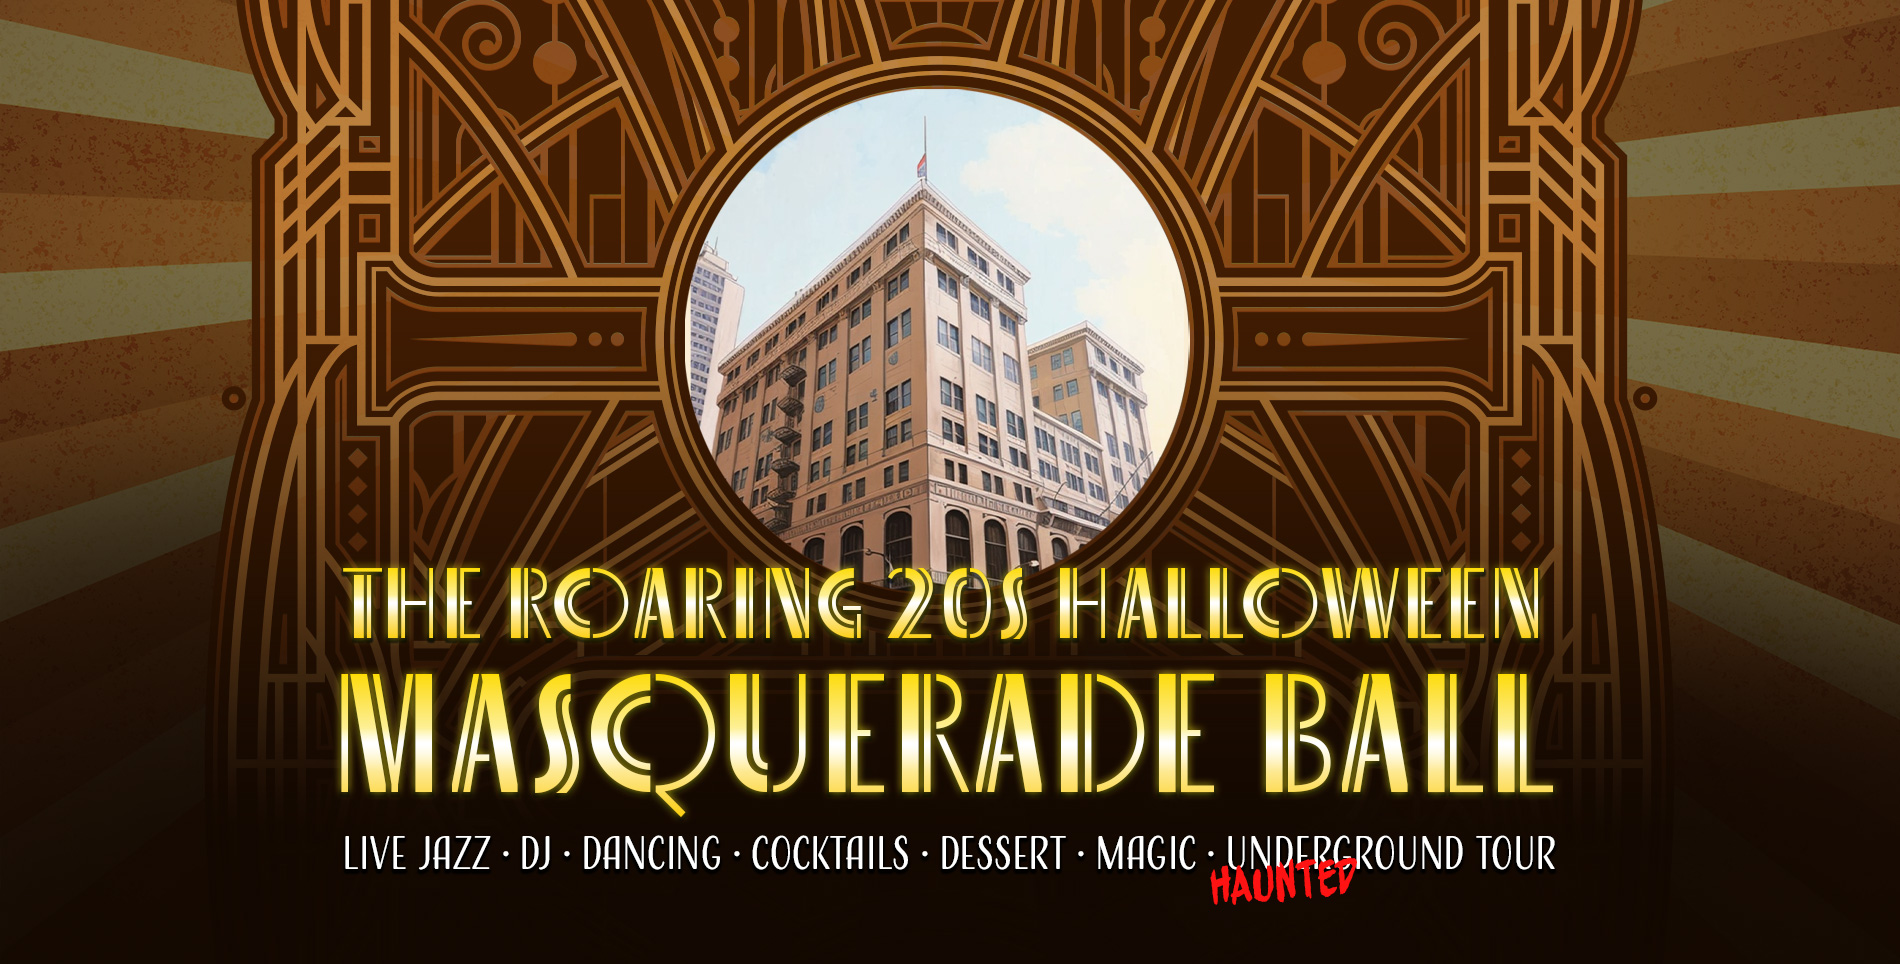 The Roaring 20s Halloween Masquerade Ball